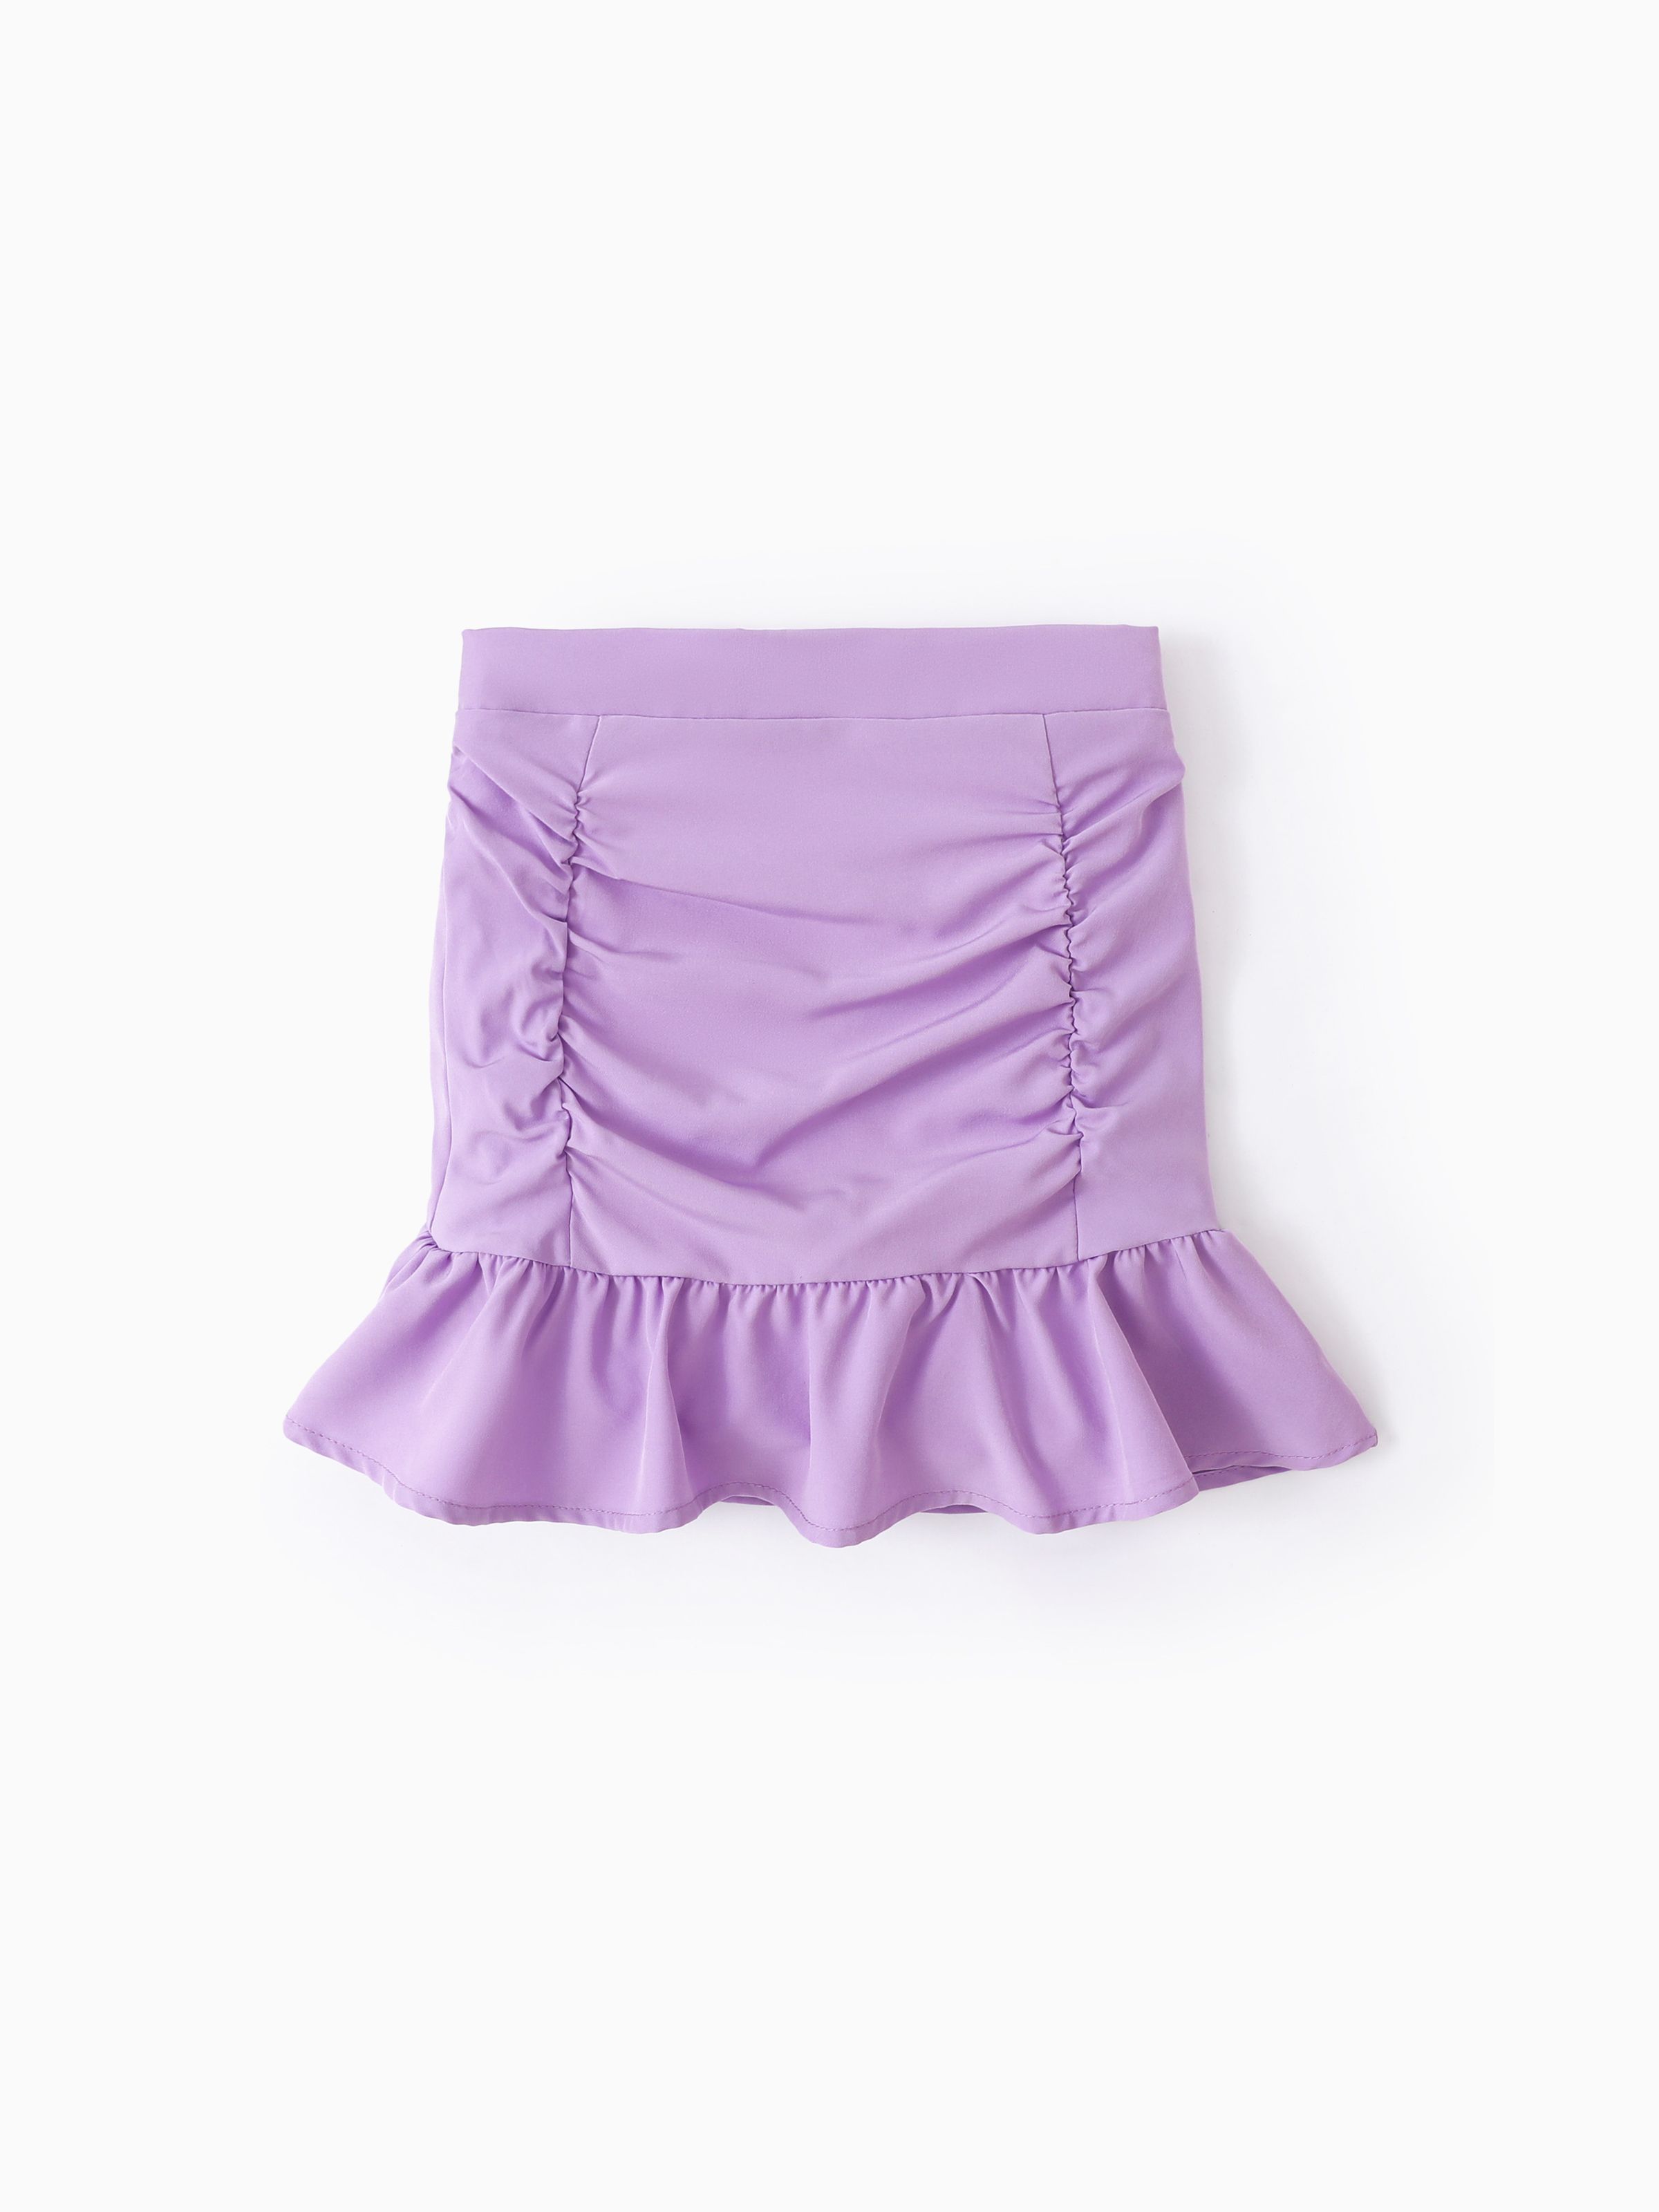 

Sweet Ruffle Edge Skirt for Girls - Polyester Spandex Blend - 1 Piece - Regular Fit - Kid's Skirt Cl